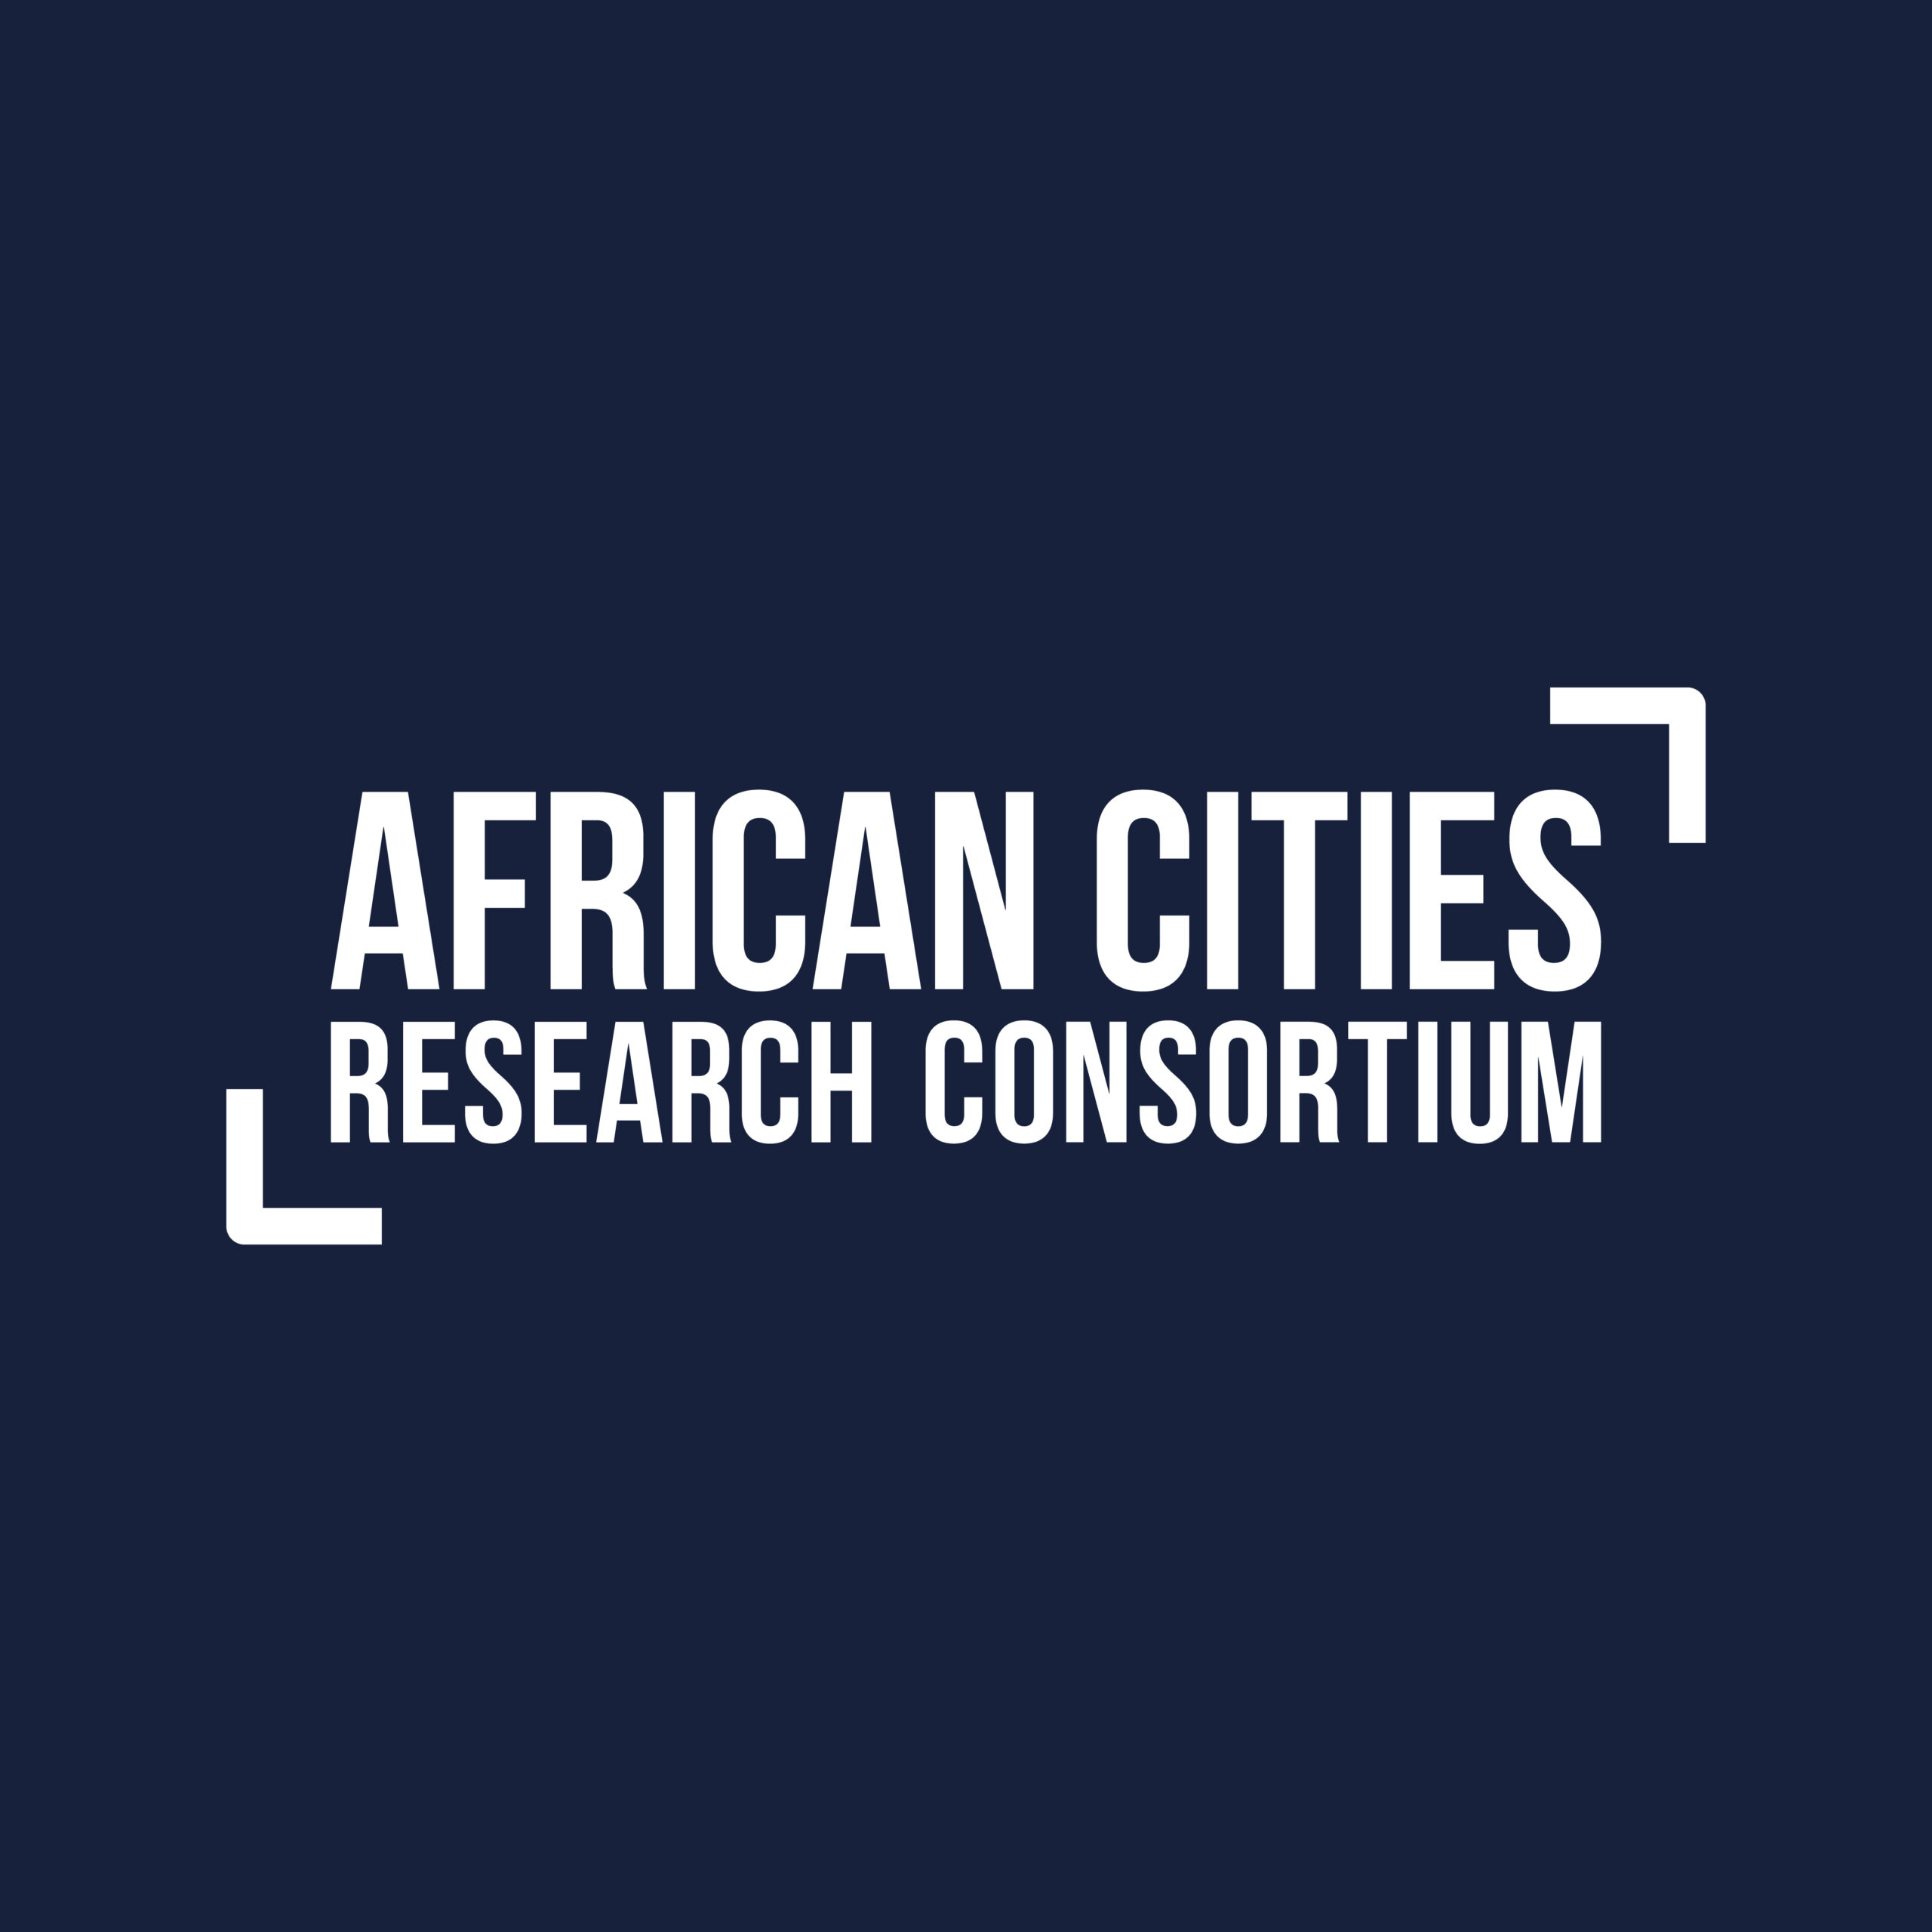 Consórcio de Pesquisa de Cidades Africanas